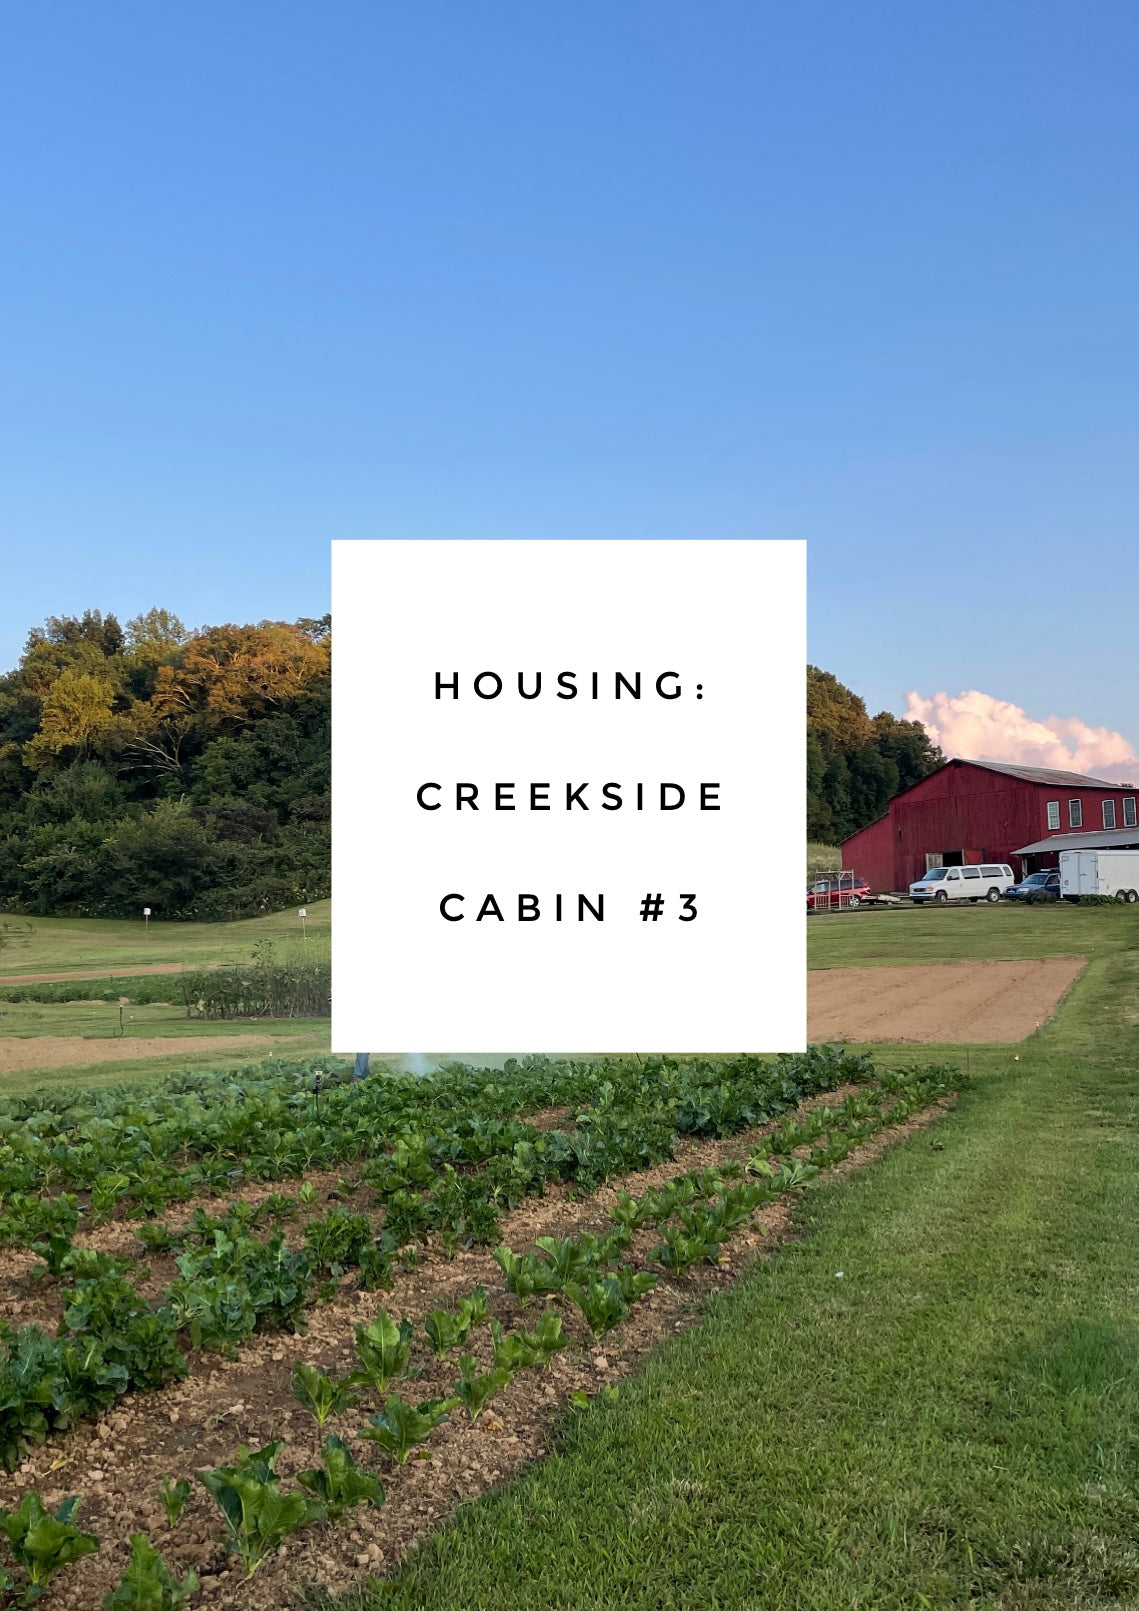 Creekside Cabin #3 - Intro to Market Gardening